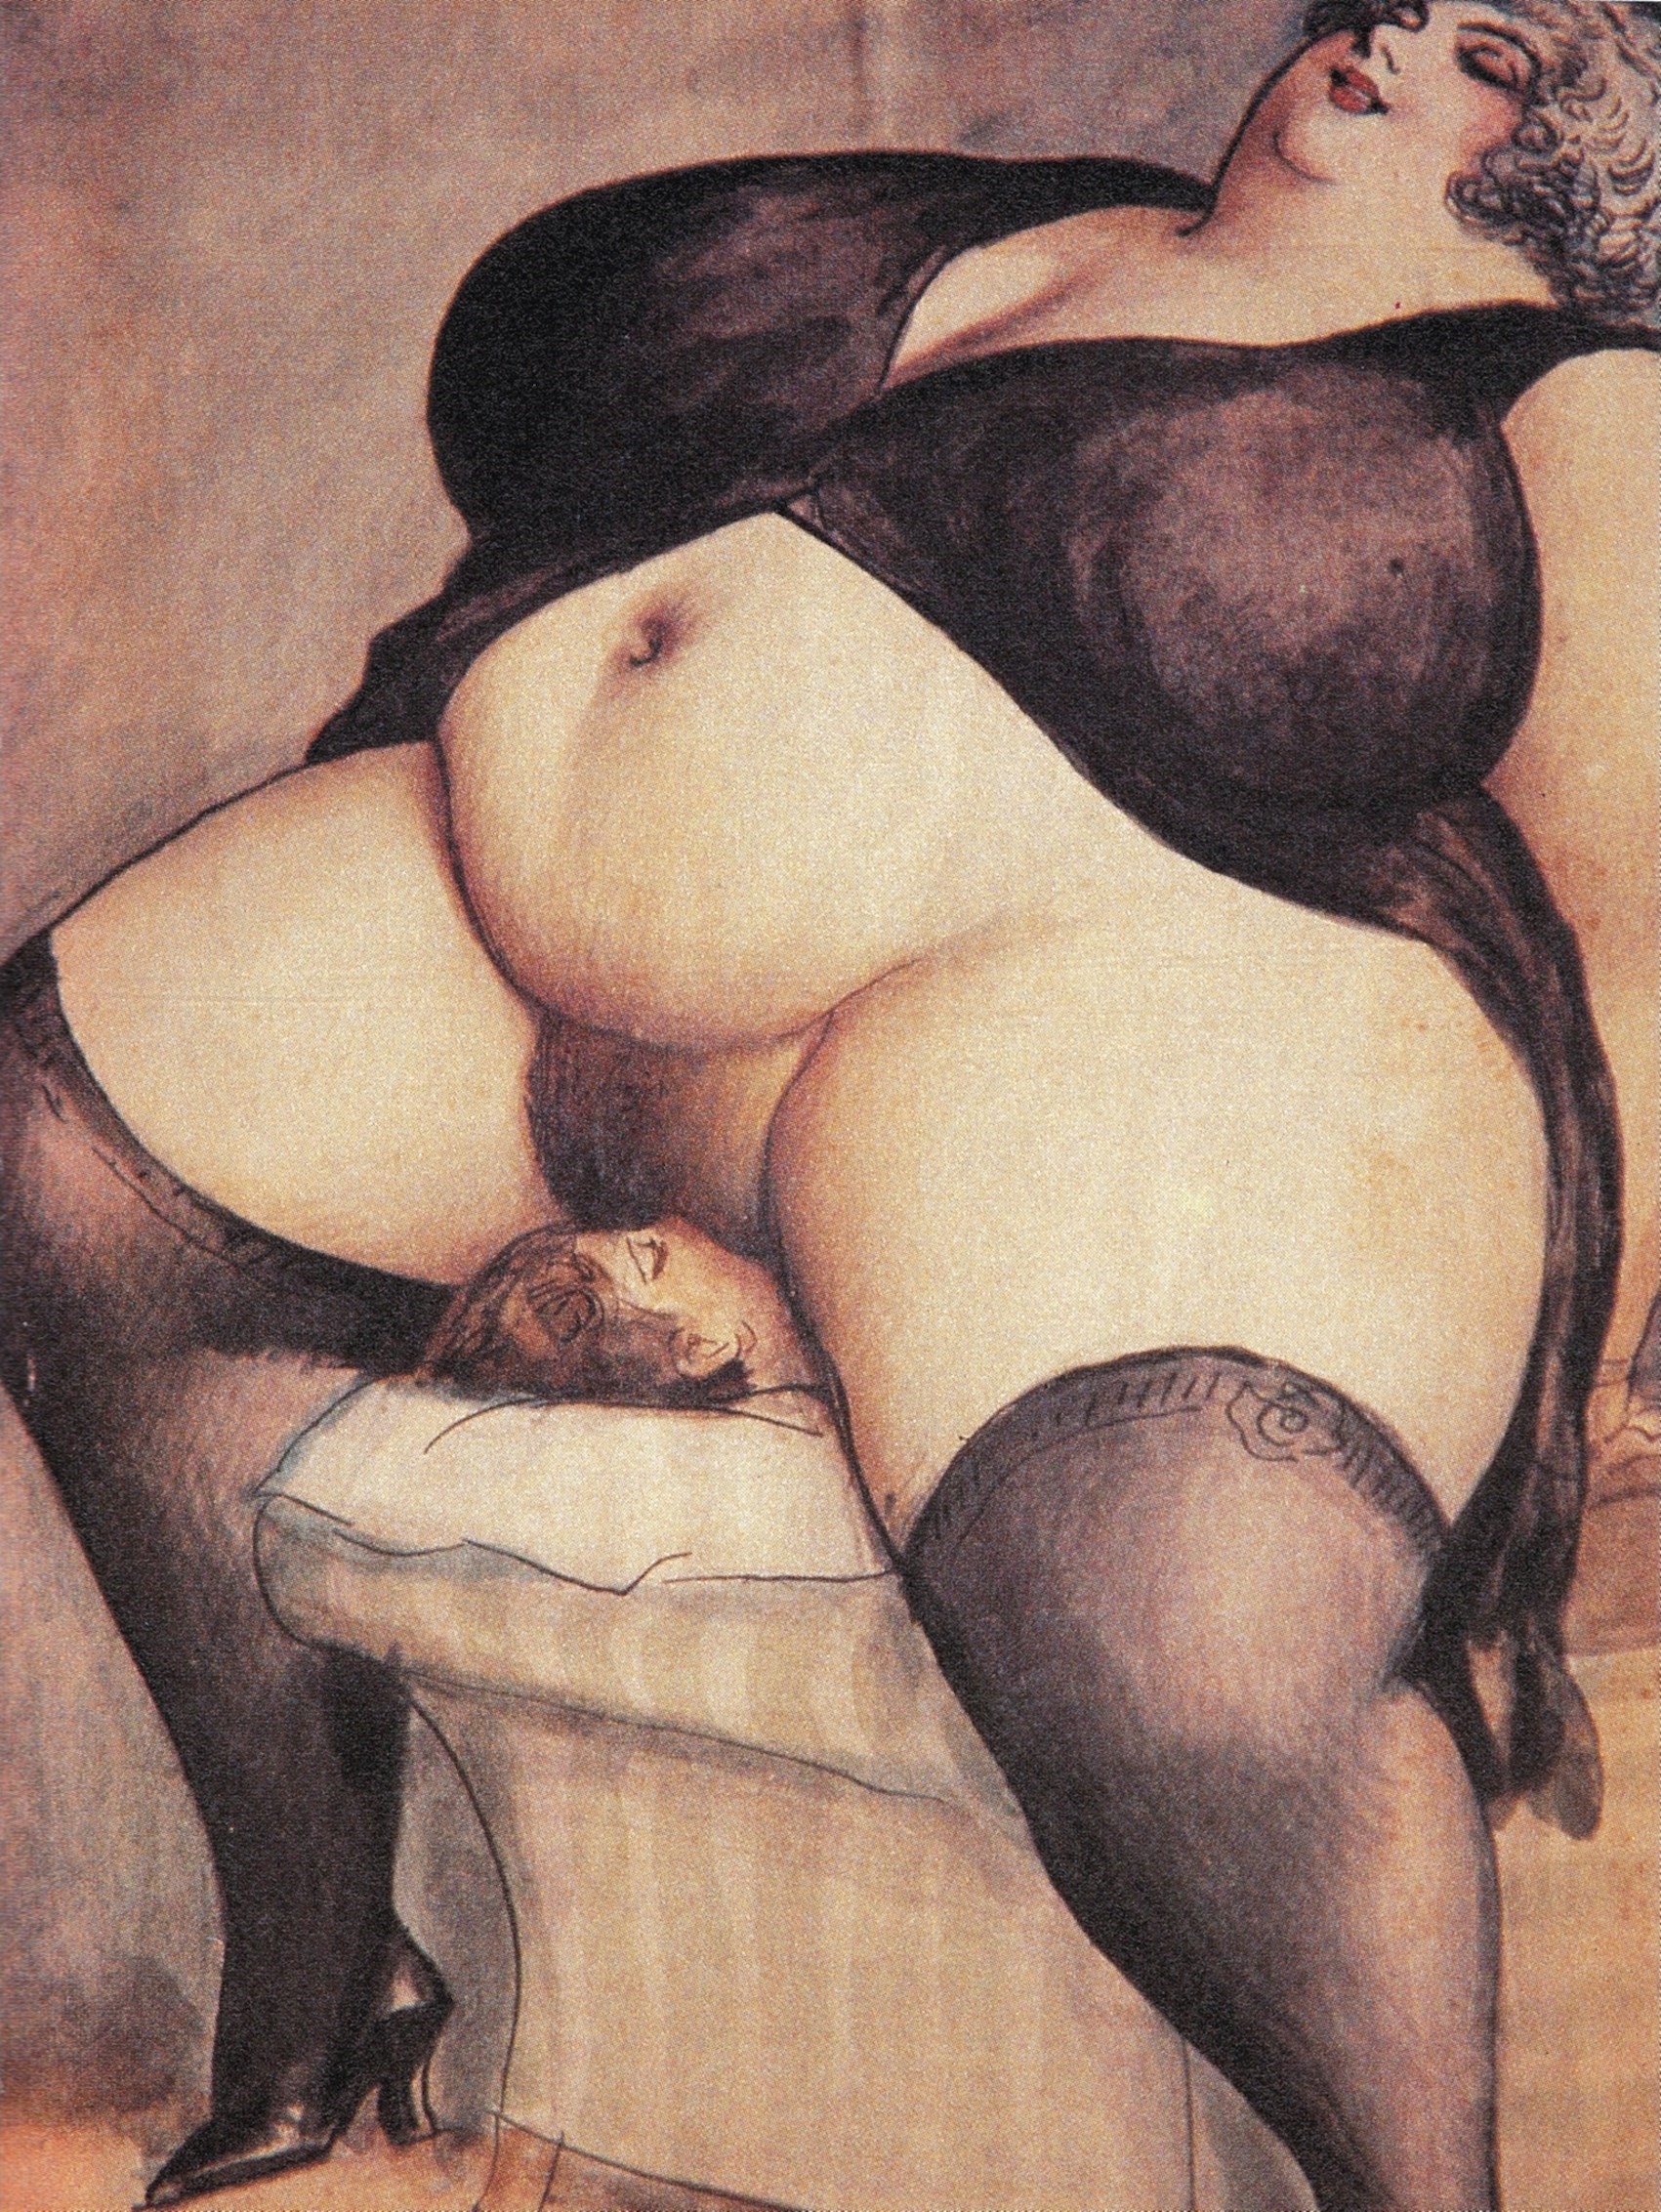 Vintage French Erotic Art - Vintage French Erotic Art Bondage | BDSM Fetish